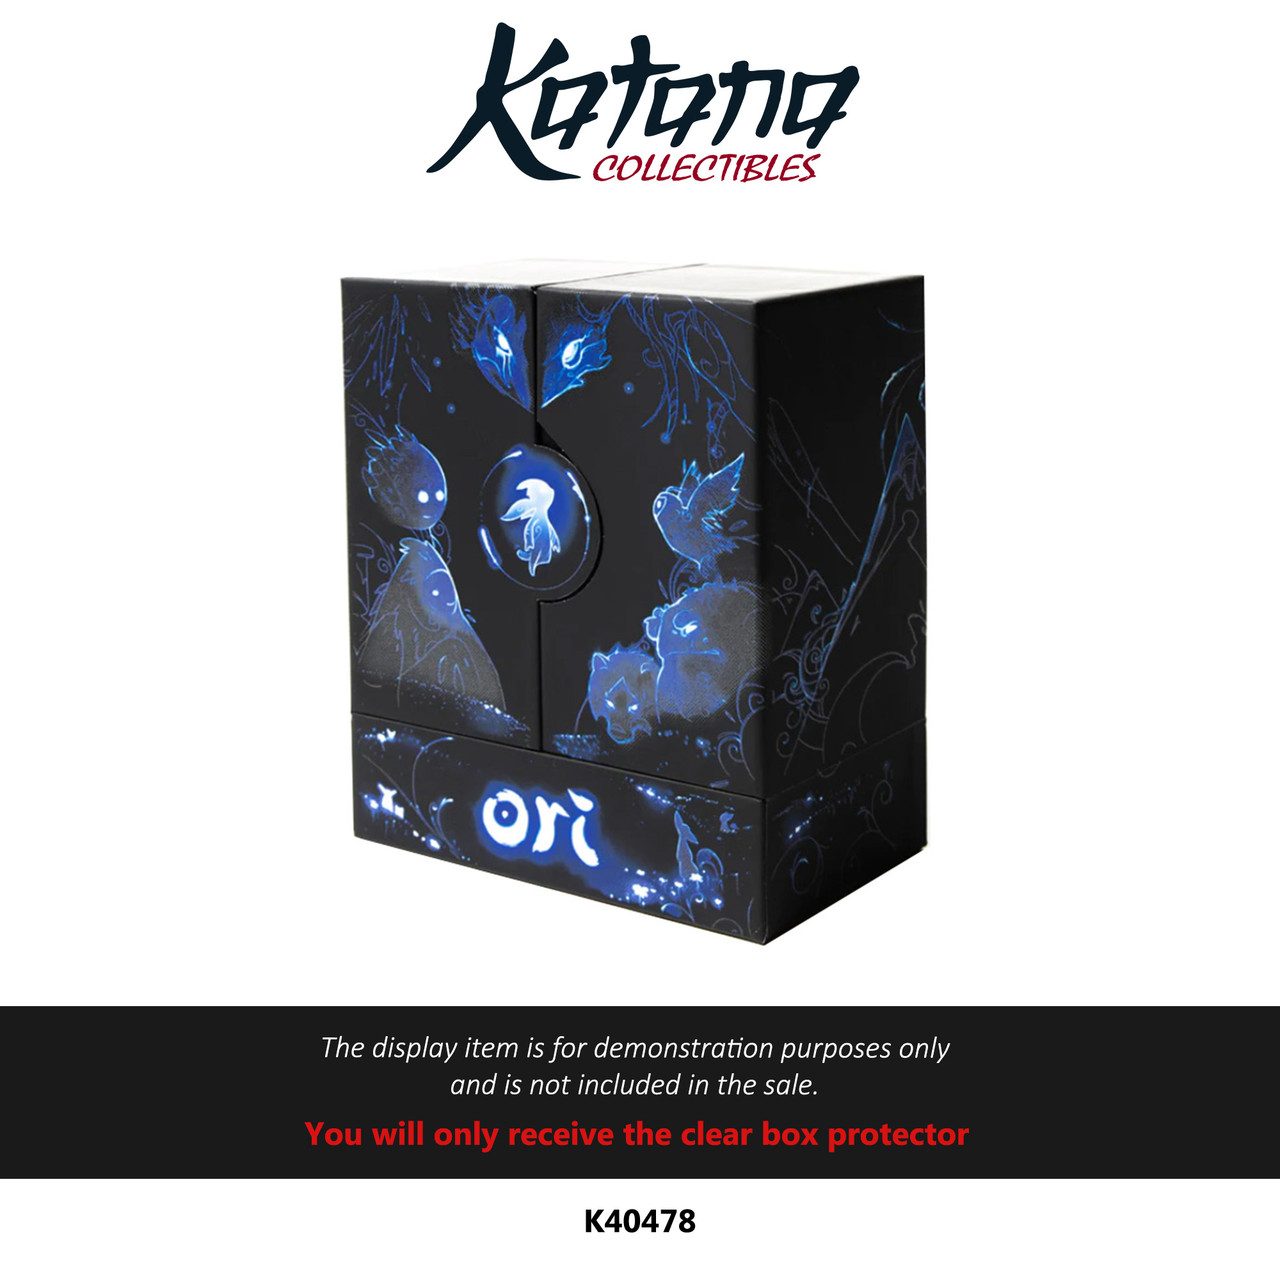 Katana Collectibles Protector For Ori iam8bit Collector's Edition